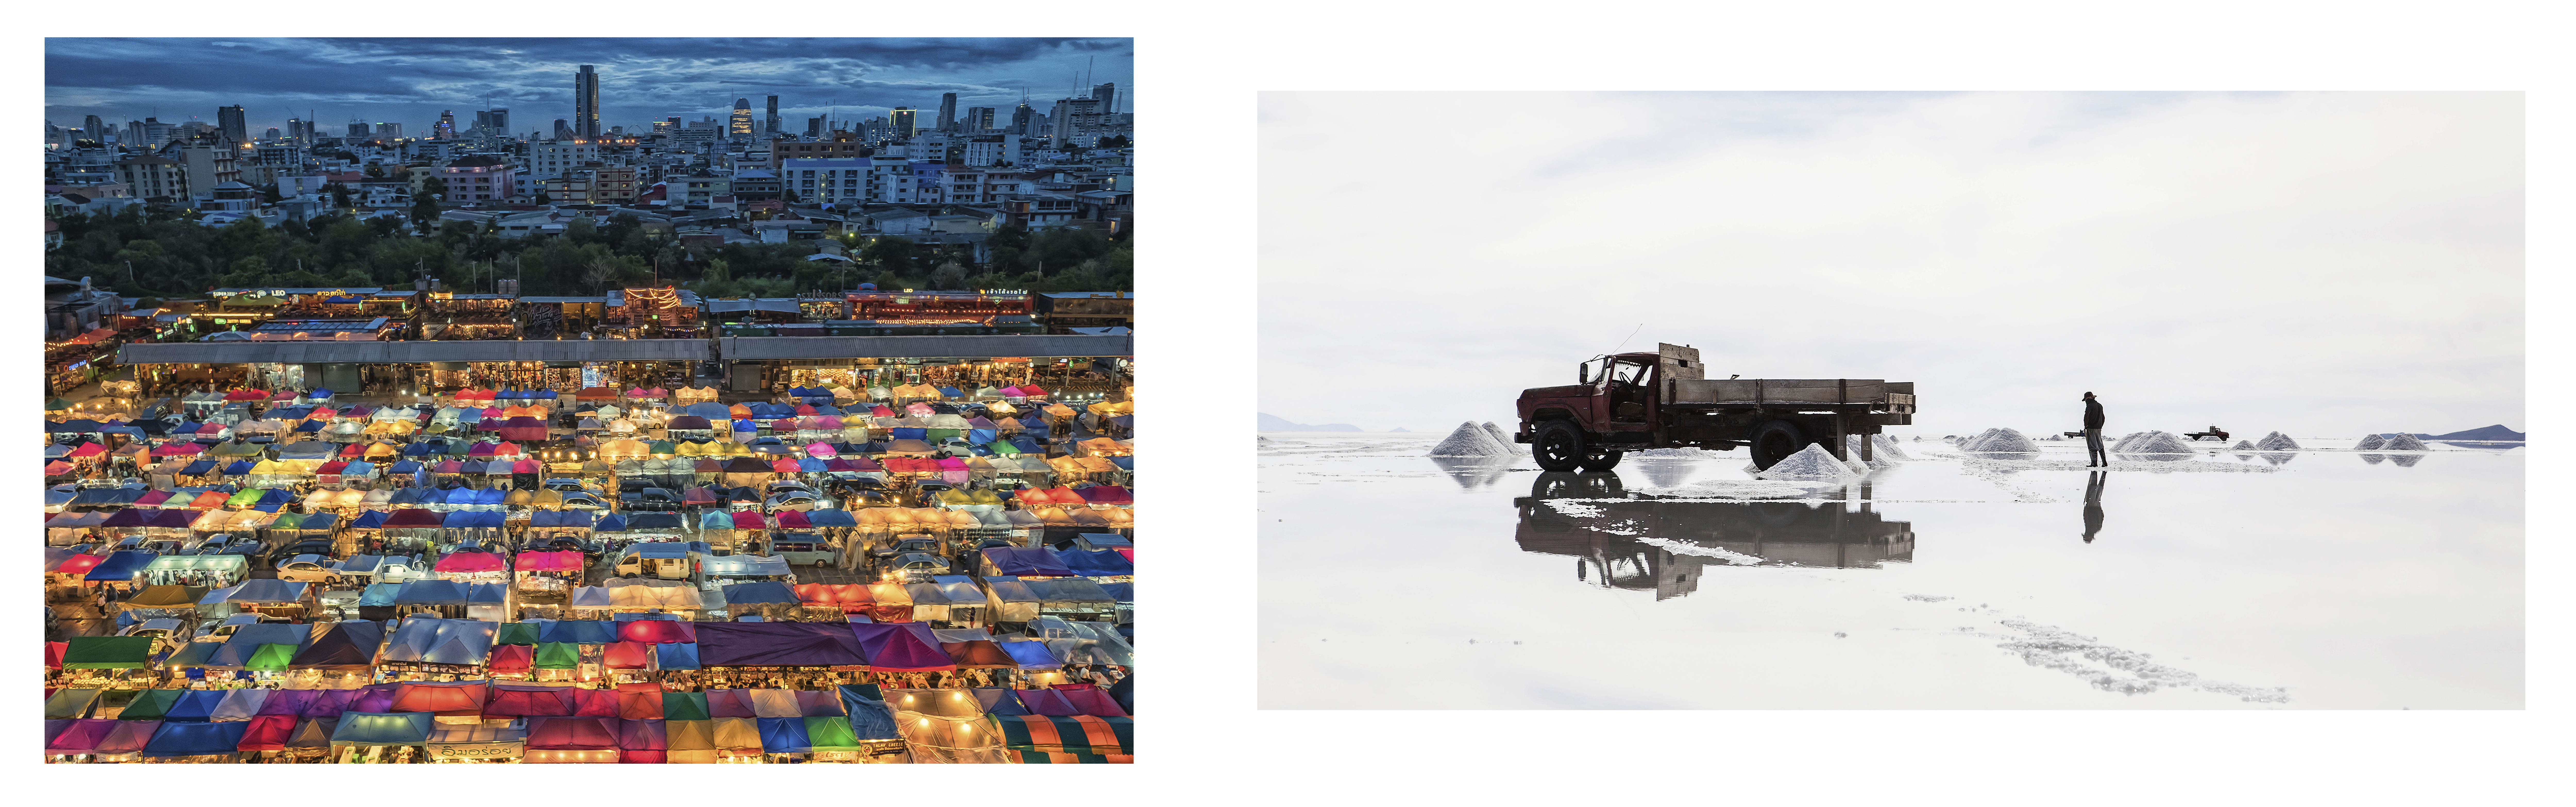 Left: “Colorful Market” – Teo Liak Song; Right: “Üyuni” – Javier Arcenillas